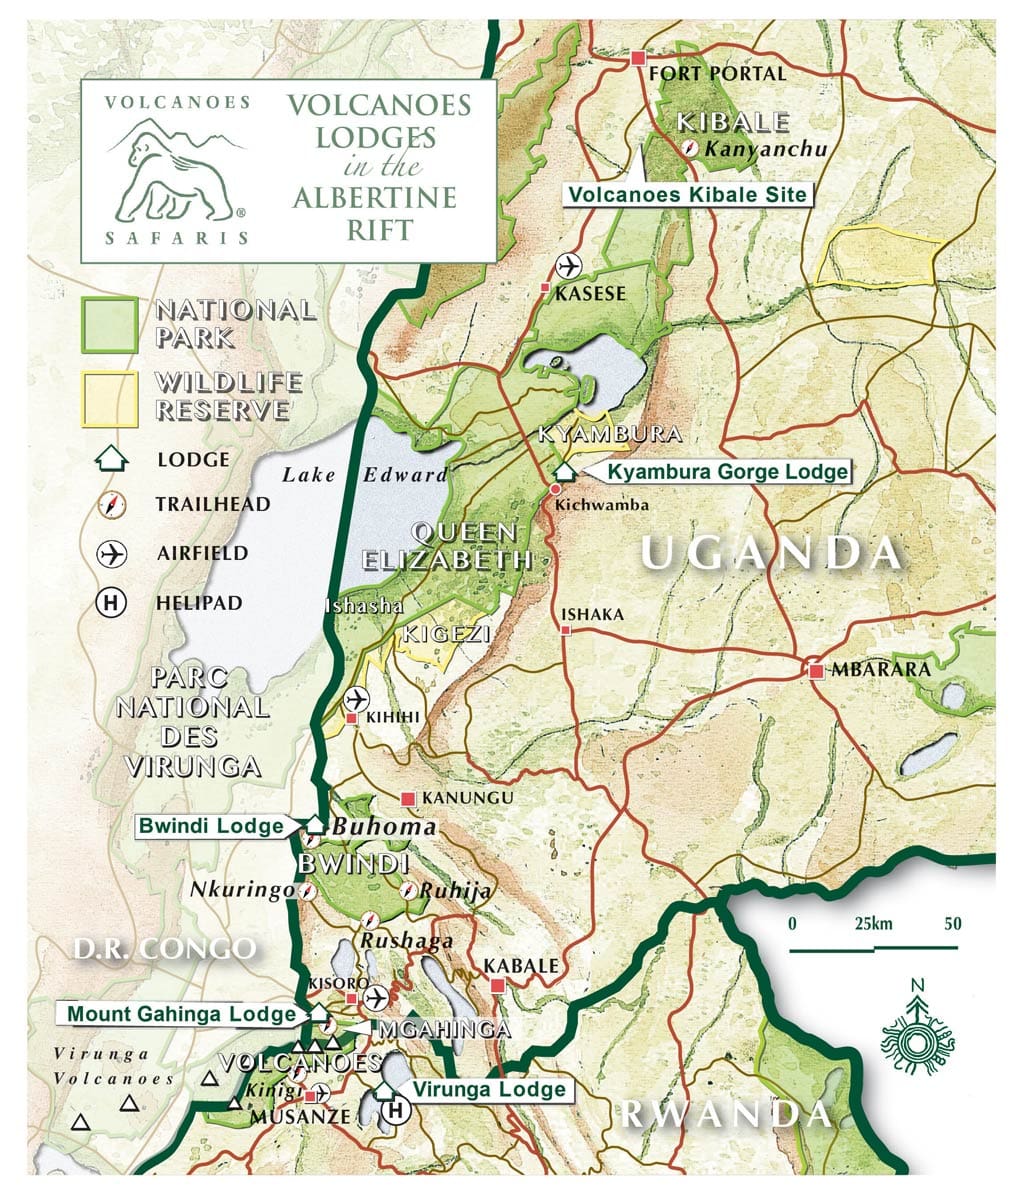 volcanoes safaris map lodges rwanda uganda